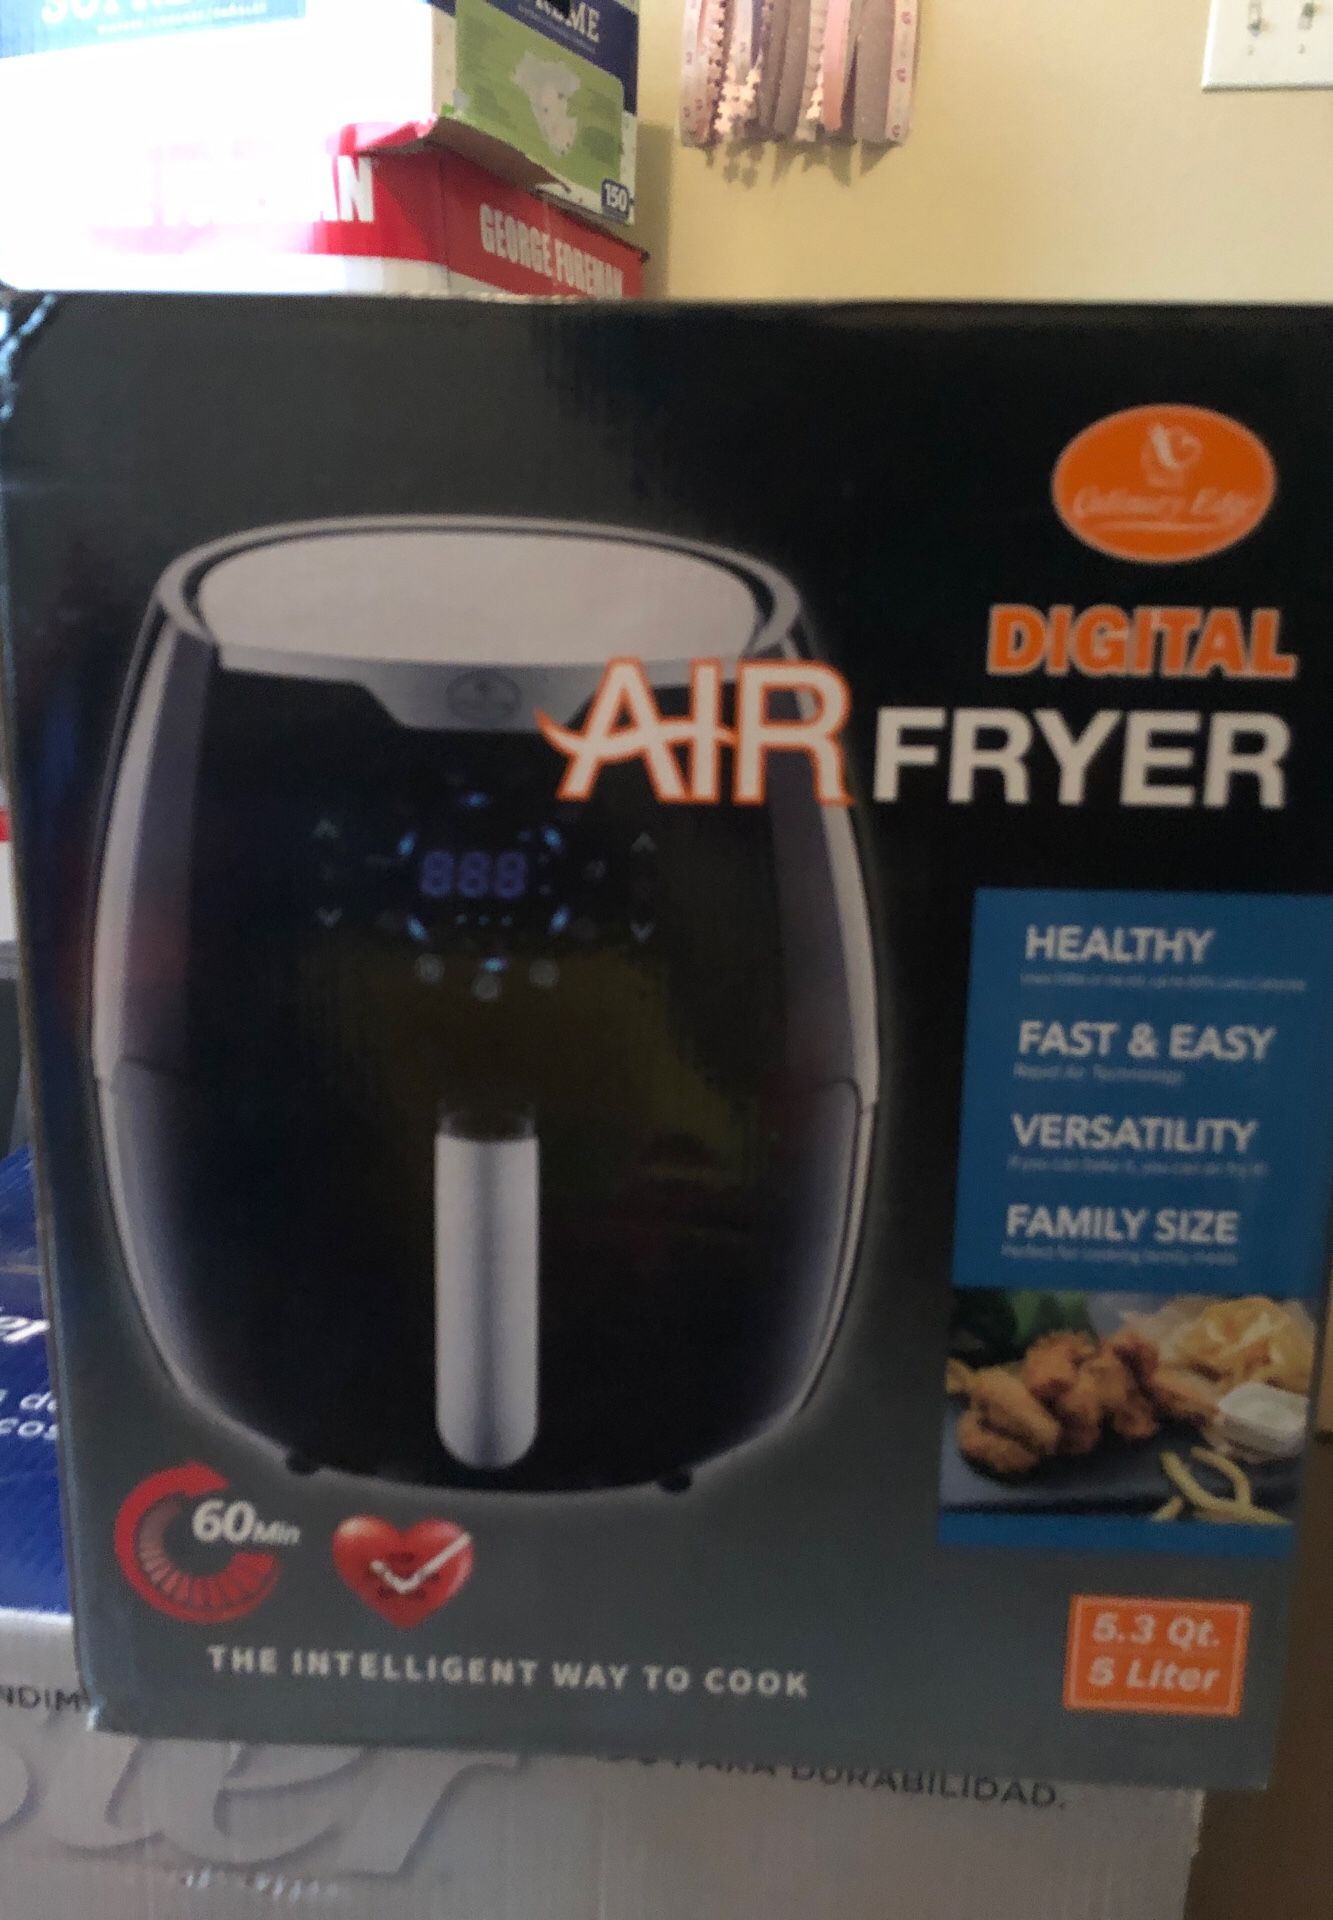 Air fryer digital 5 liter